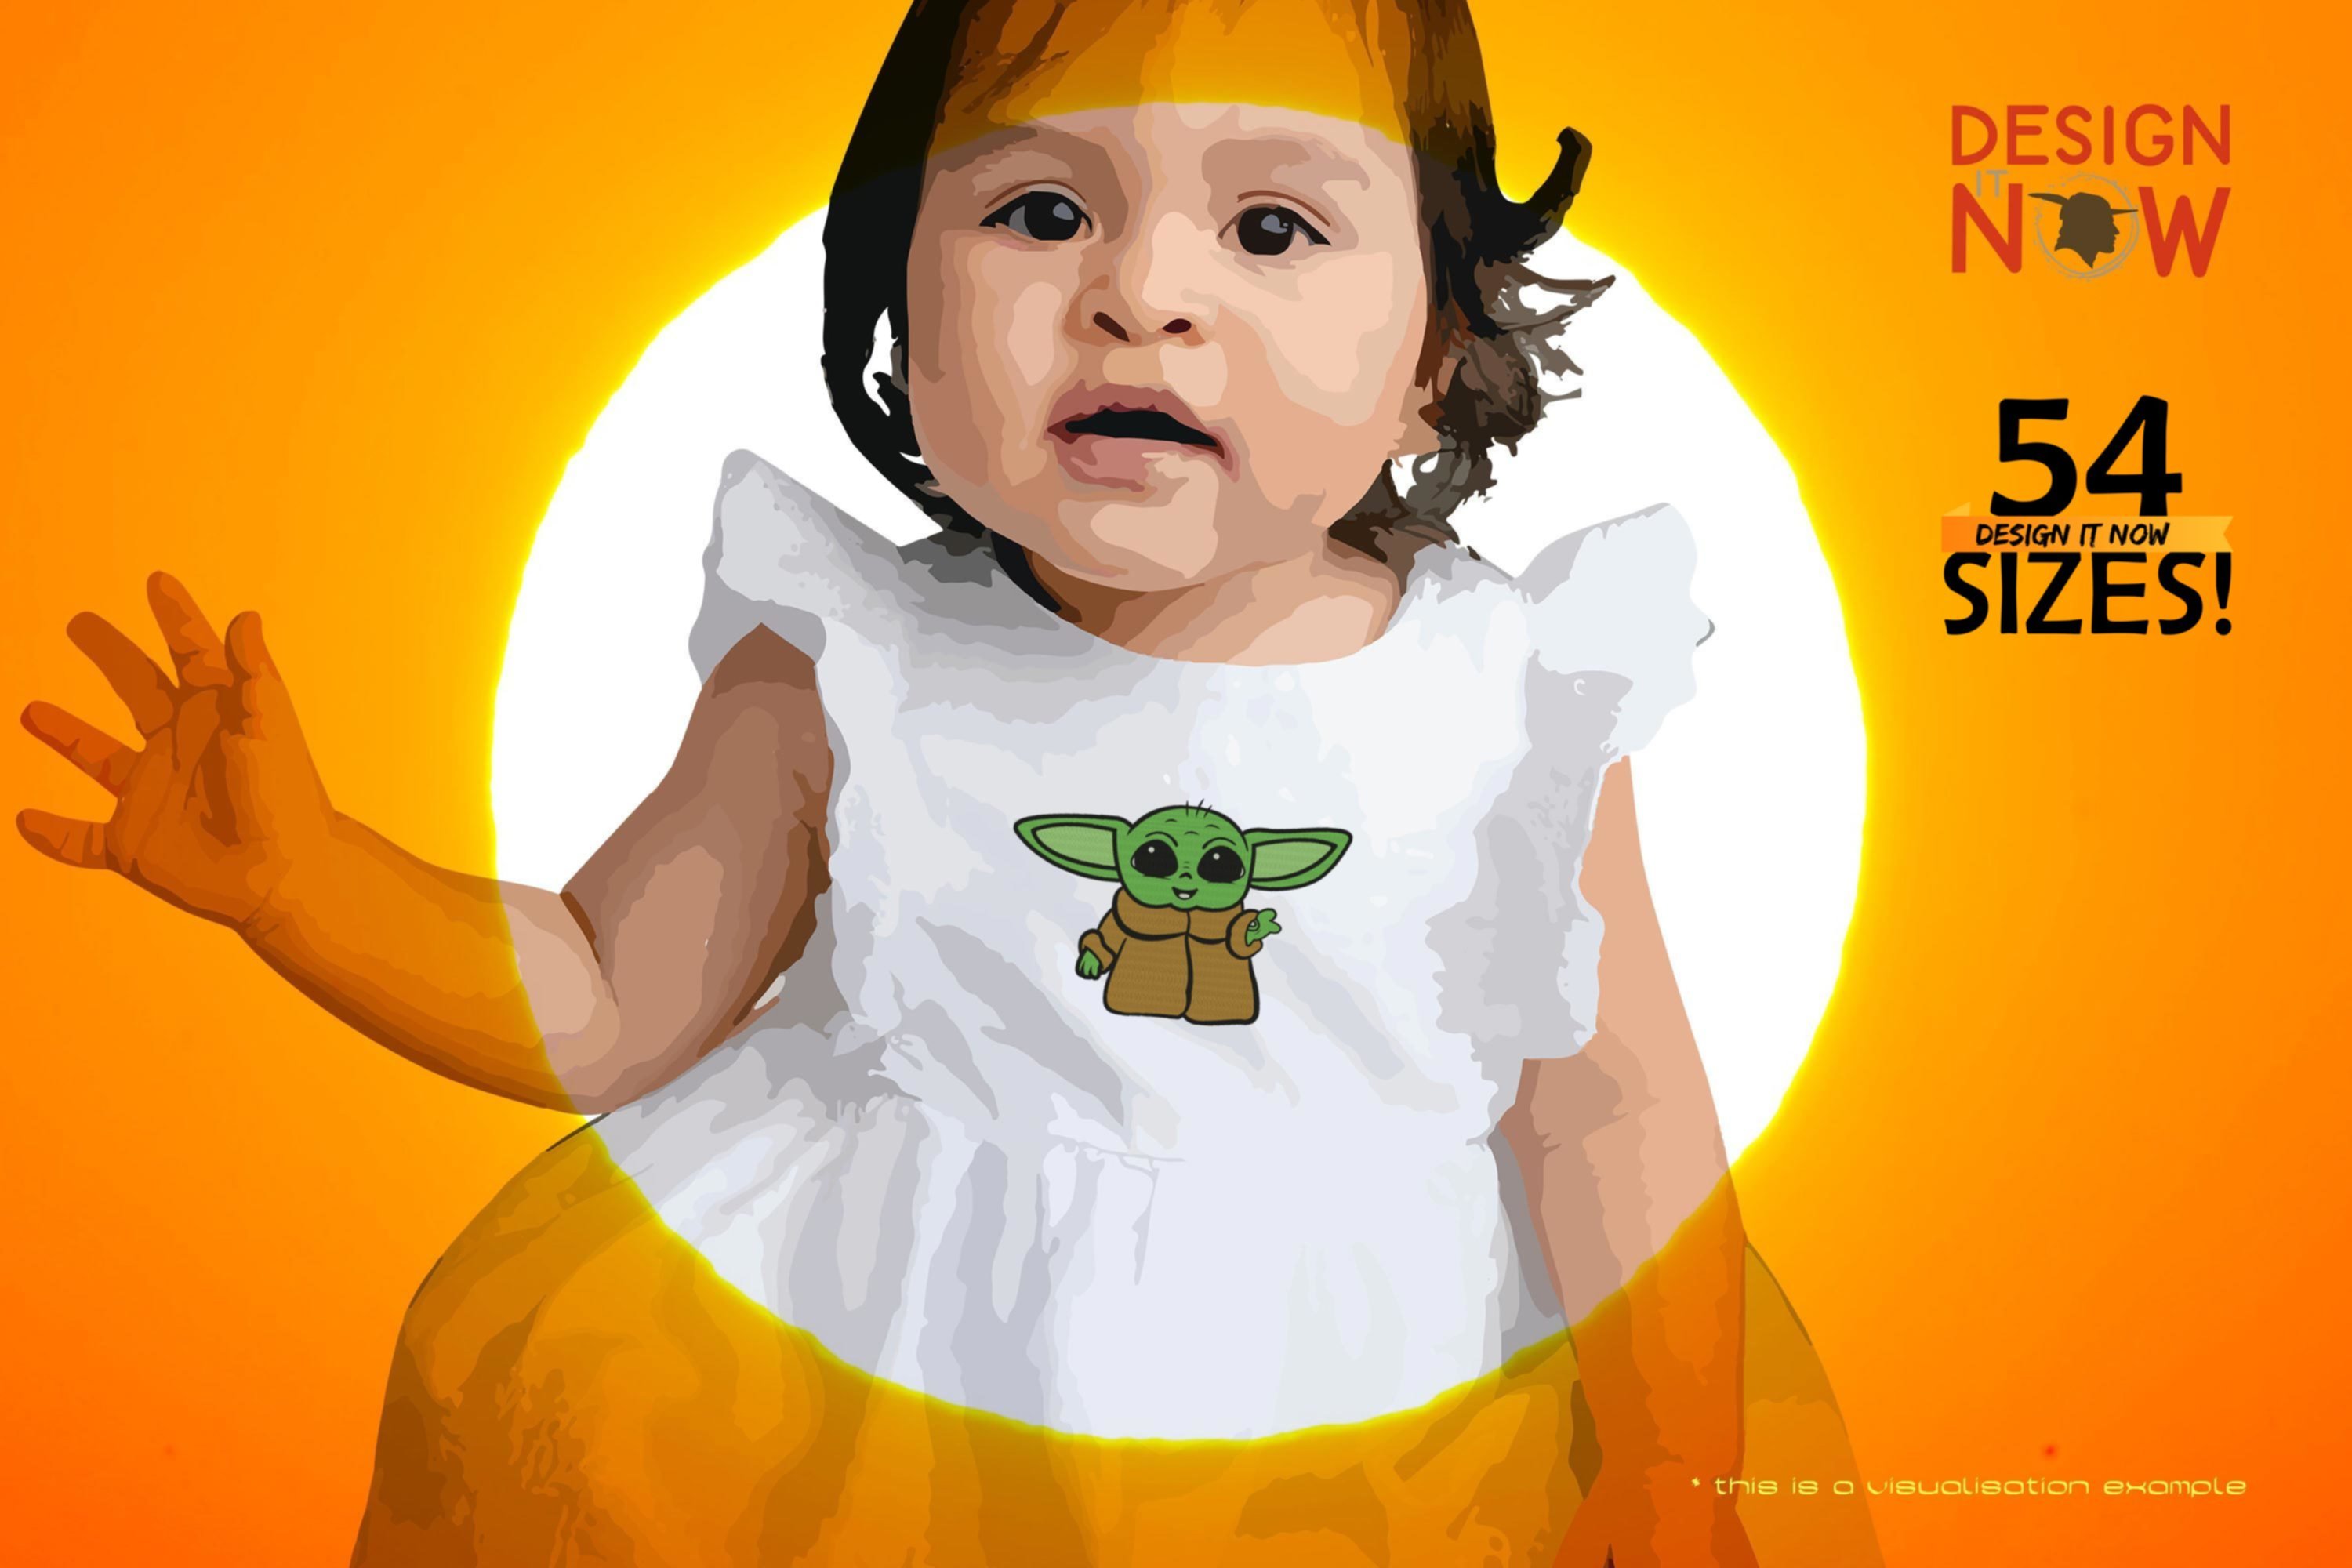 Tribute To Fictional Character Grogu aka Baby Yoda (Hello)